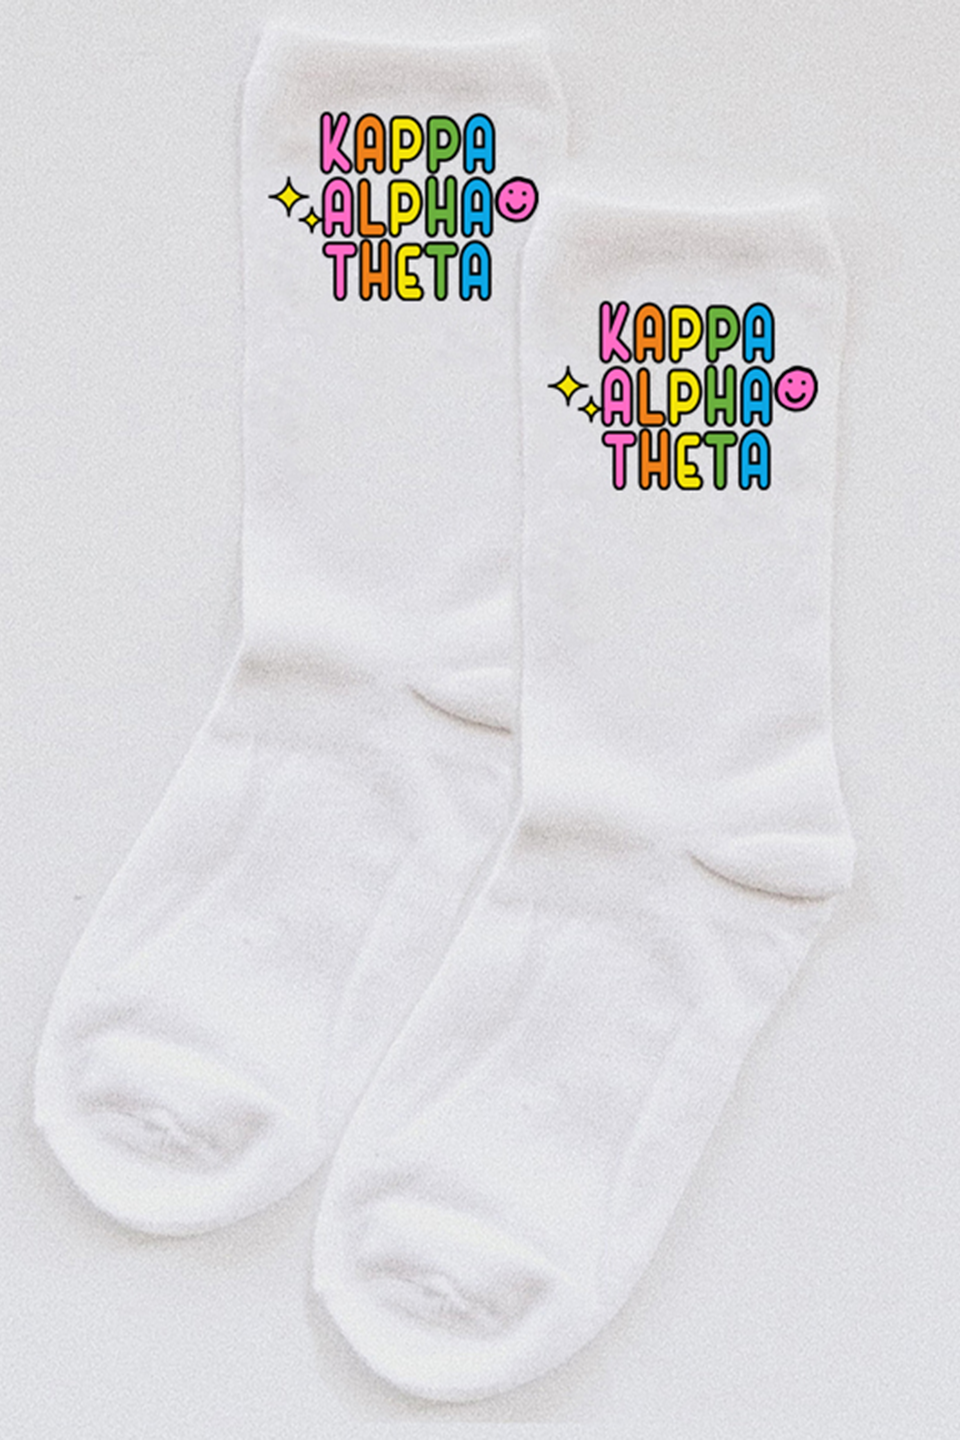 Colorful socks - Spikes and Seams Greek